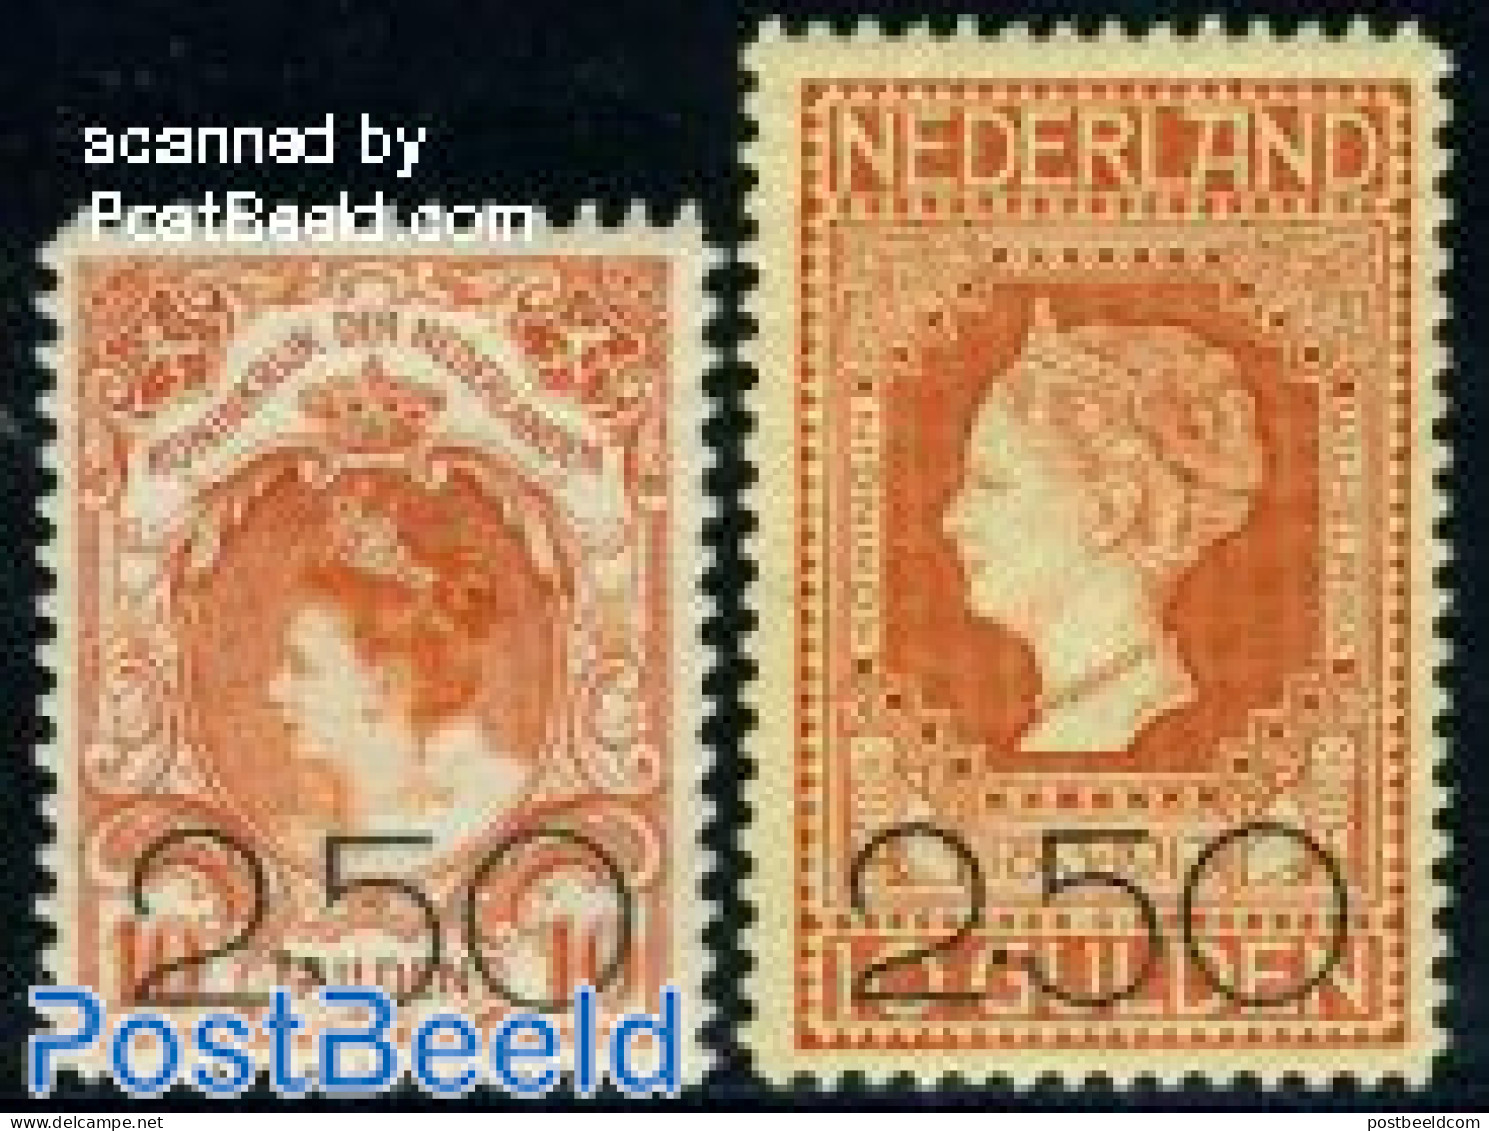 Netherlands 1920 Overprints 2v, Unused (hinged) - Unused Stamps